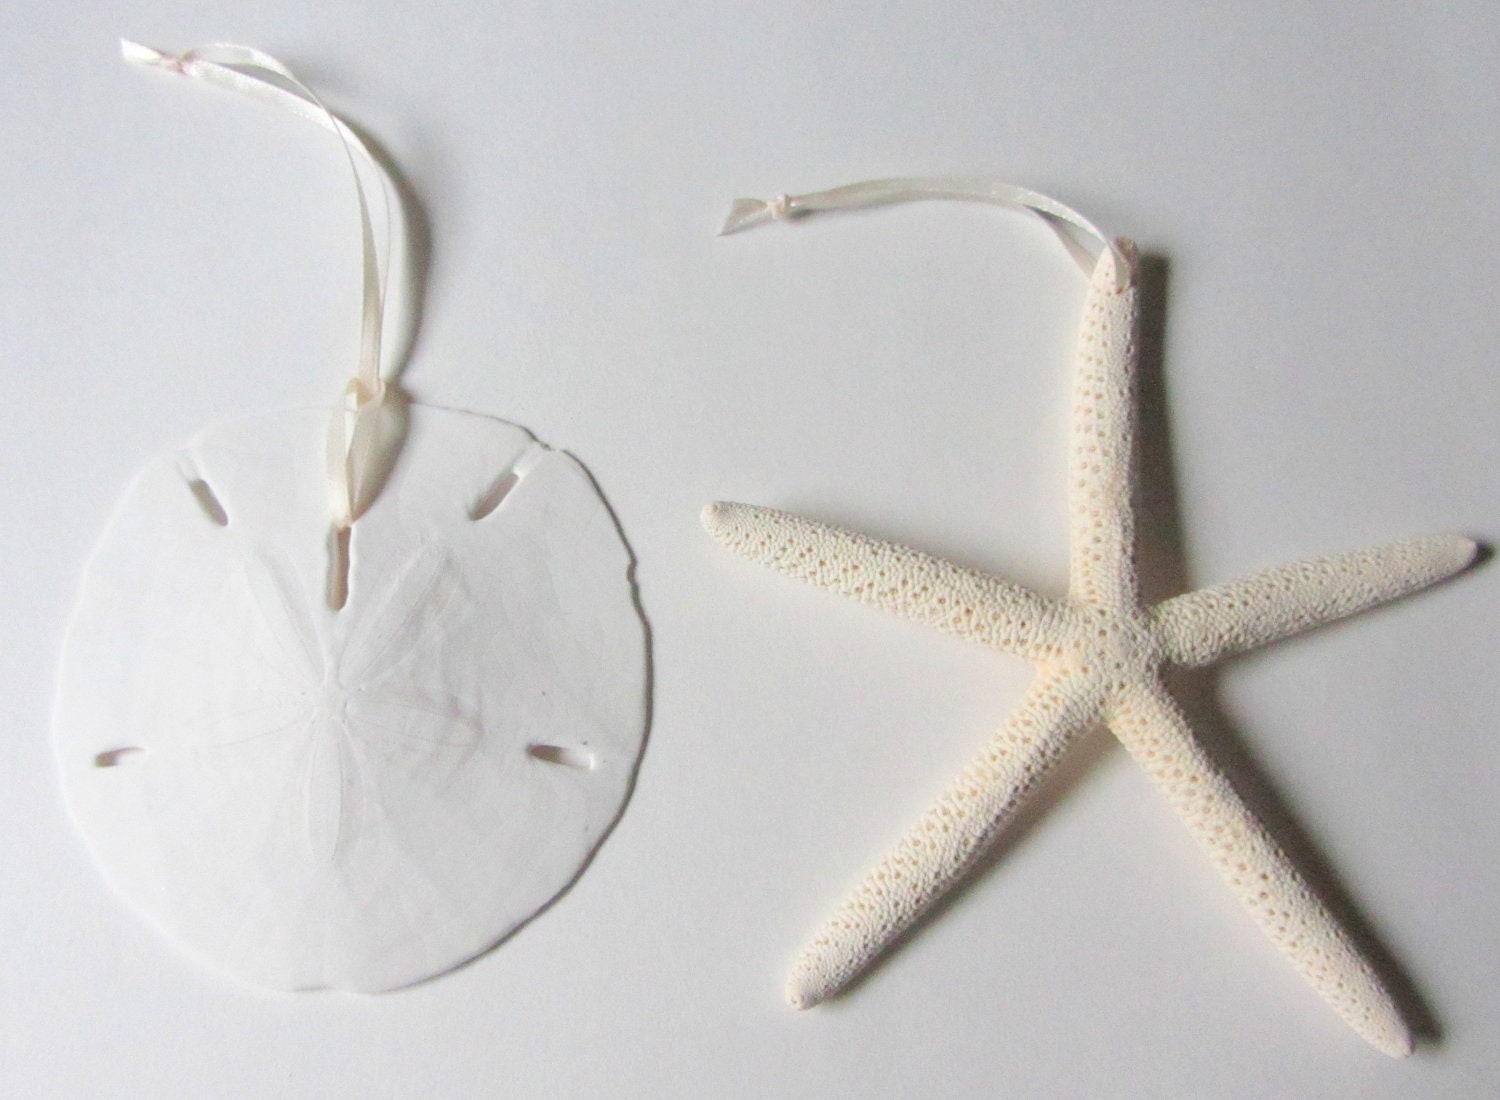 Starfish and Sand Dollar Ornaments